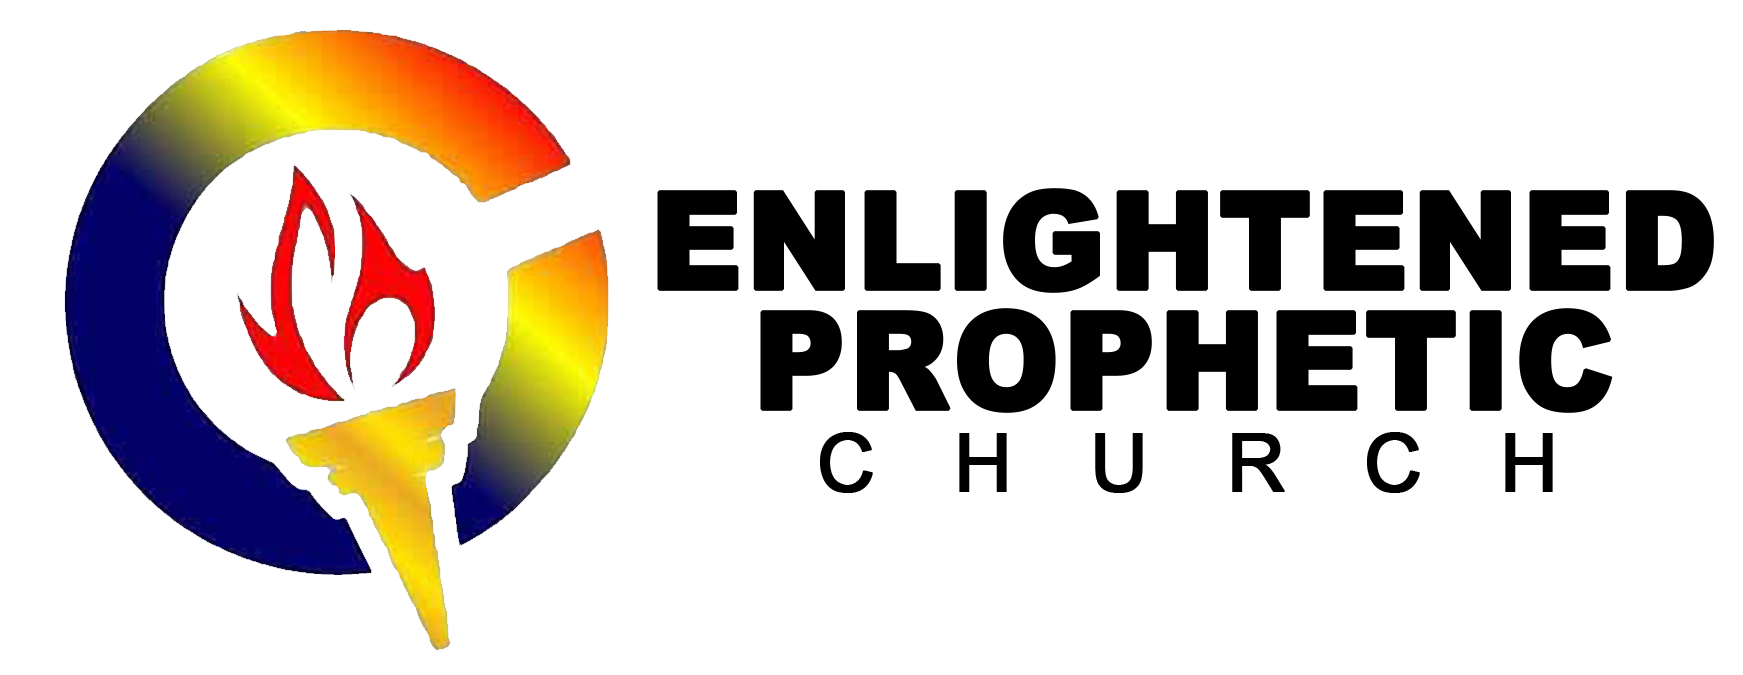 Enlightened Prophetic Church (EPC)